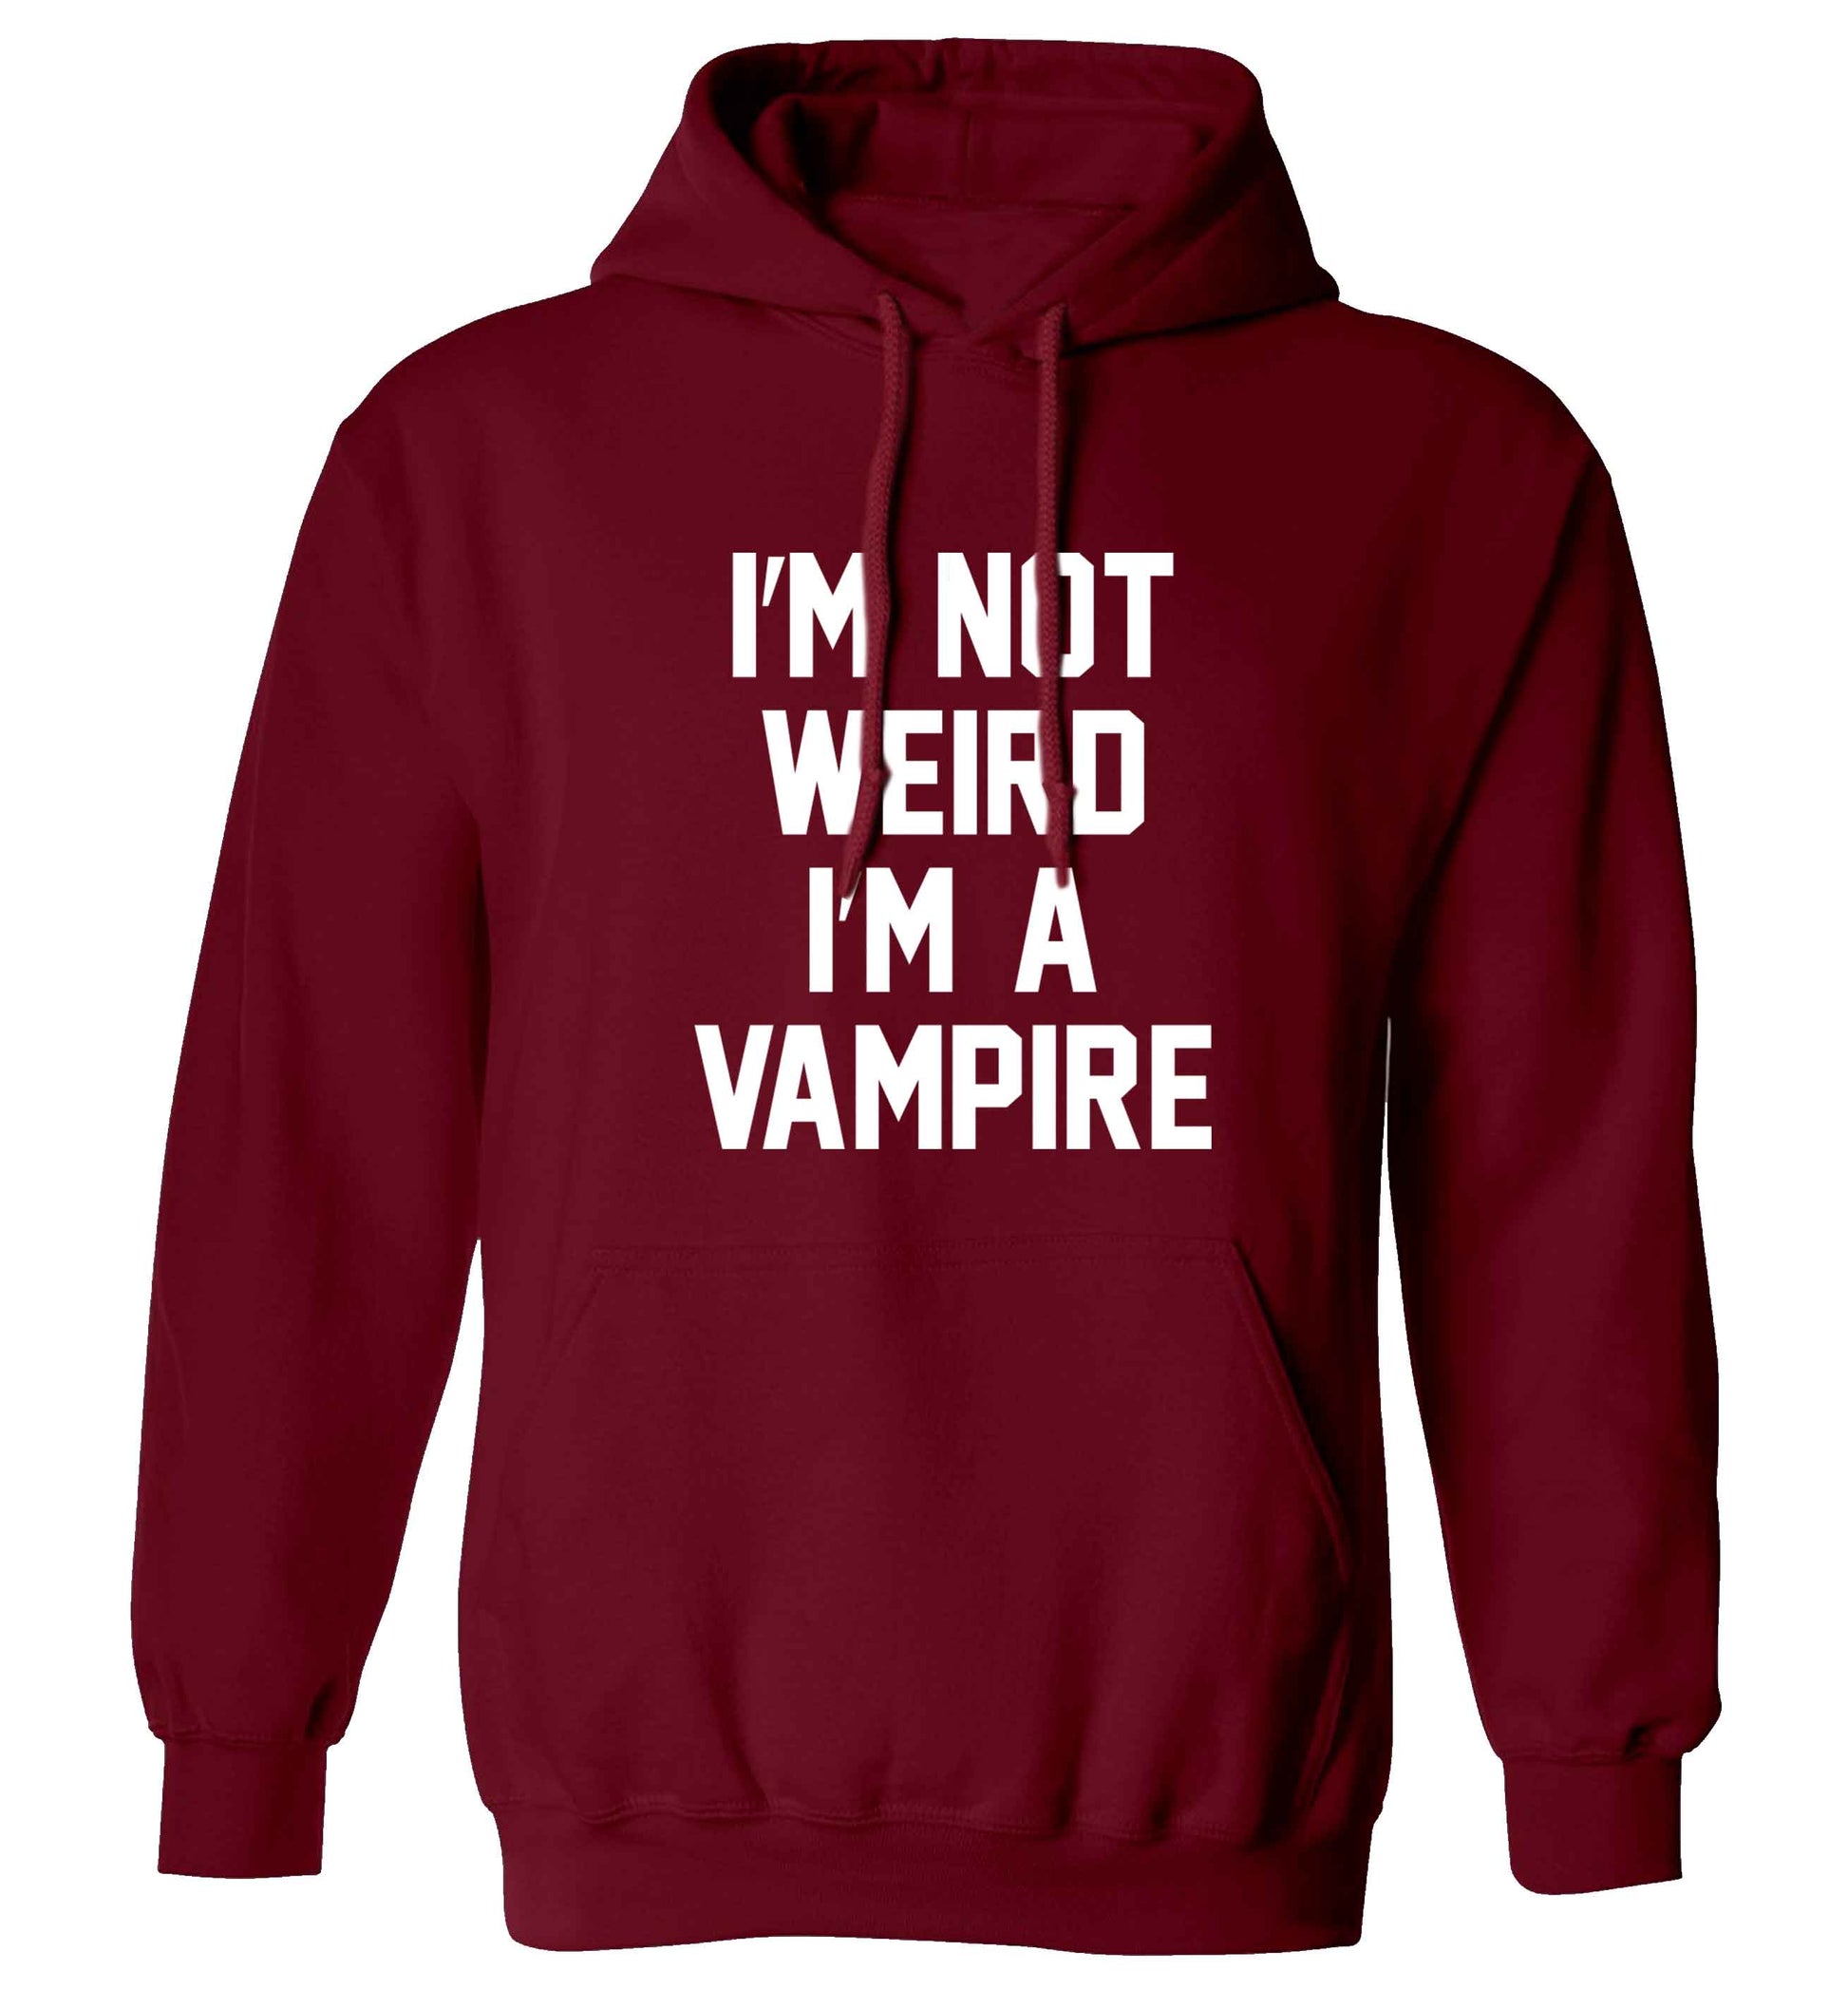 I'm not weird I'm a vampire adults unisex maroon hoodie 2XL